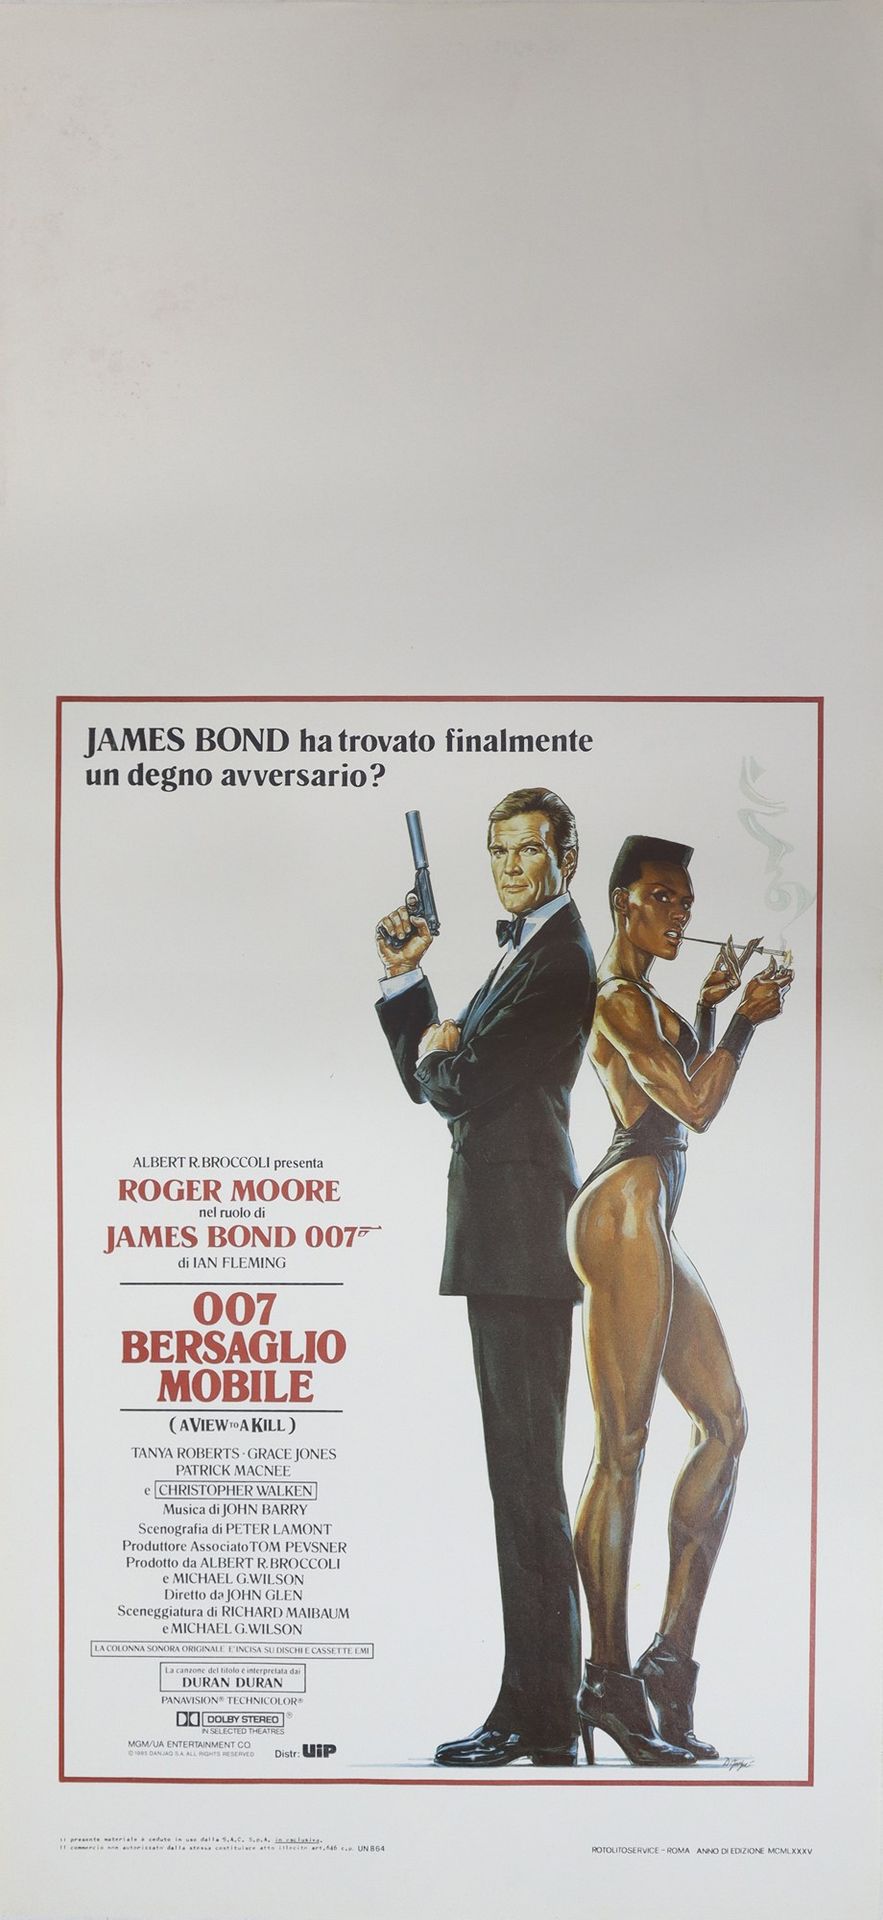 Null 电影海报 "007移动目标"，1985年，70厘米x33厘米，Rotolitoservice - 罗马，日期在右下角，使用痕迹正常。